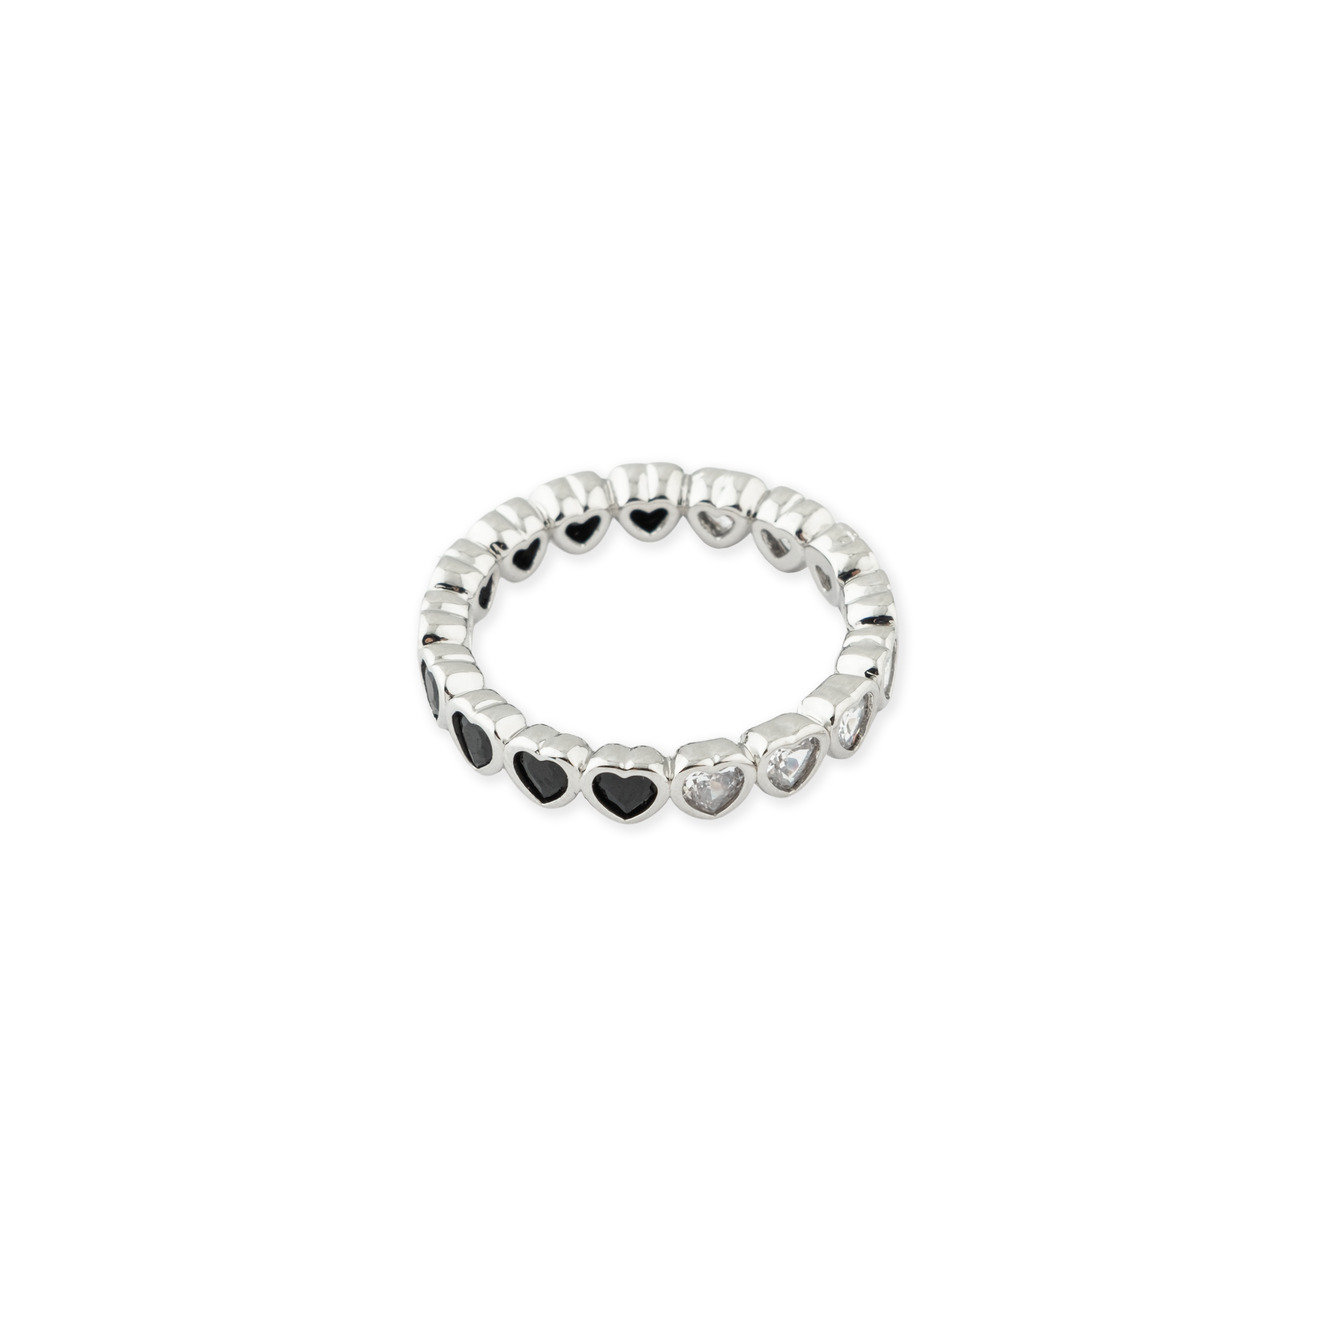 Herald Percy Серебристое кольцо из сердец с белыми и черными кристаллами herald percy серебристое колье с белыми кристаллами